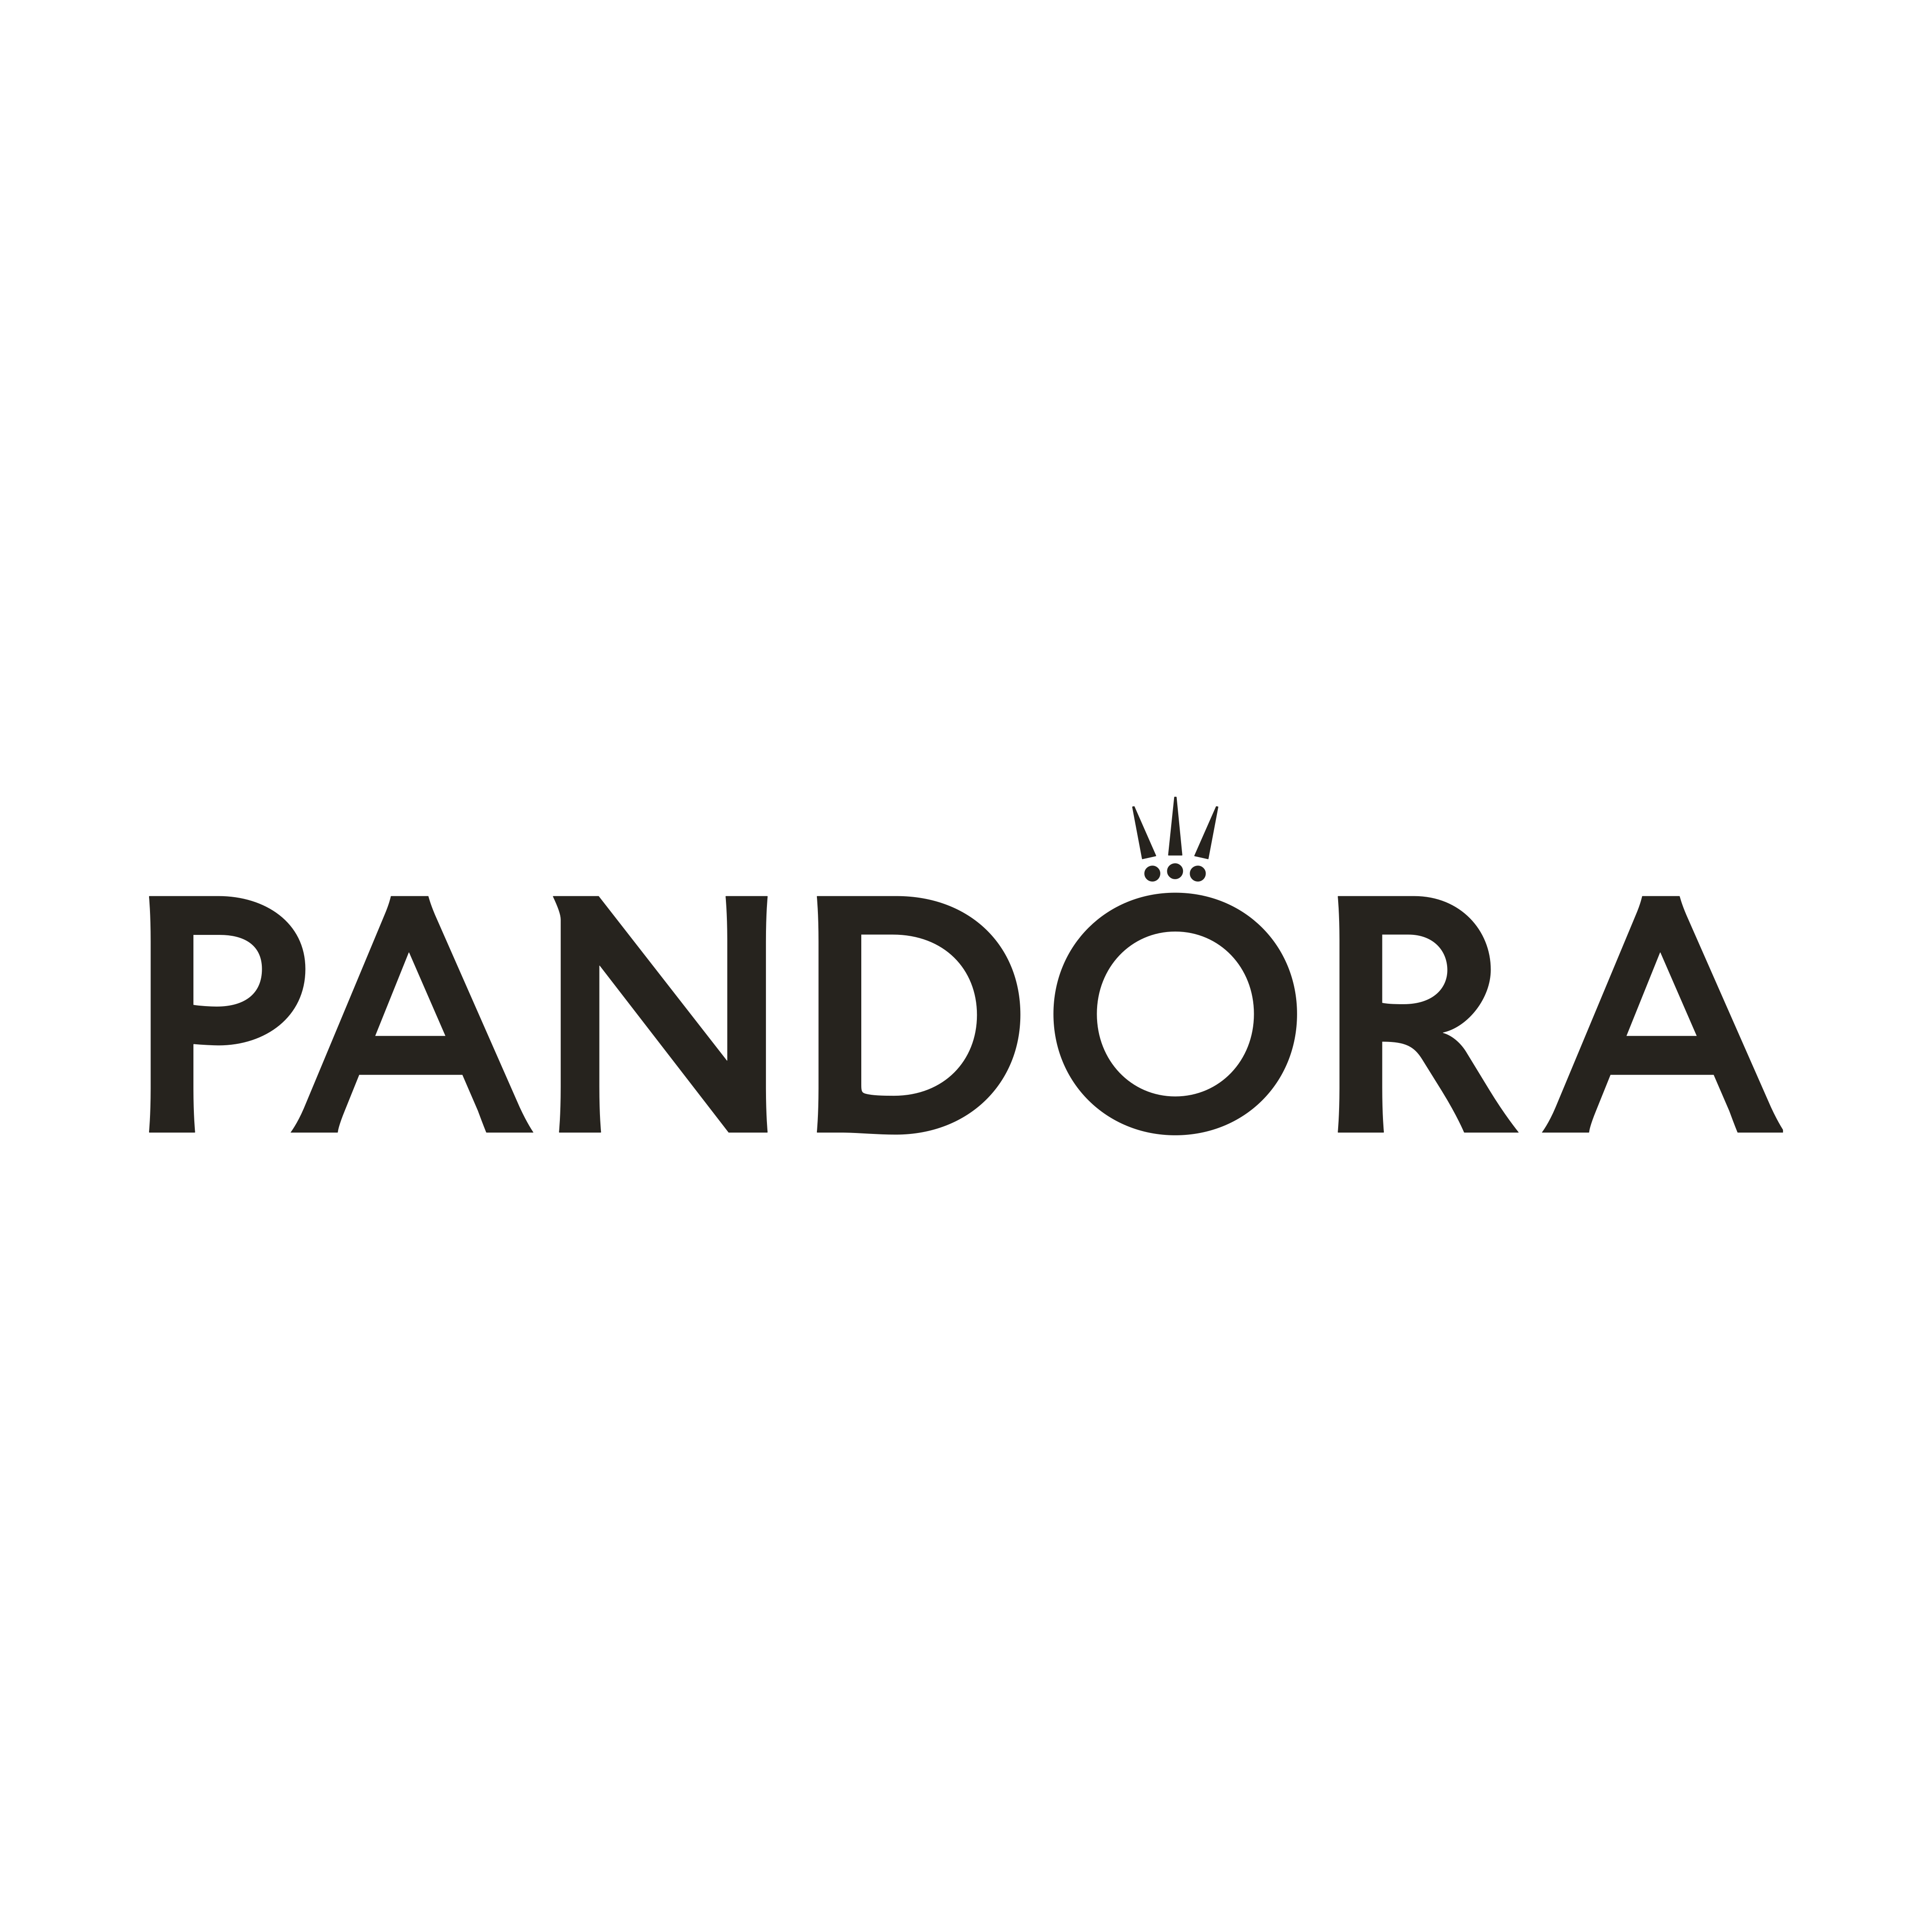 Pandora Logo PNG.